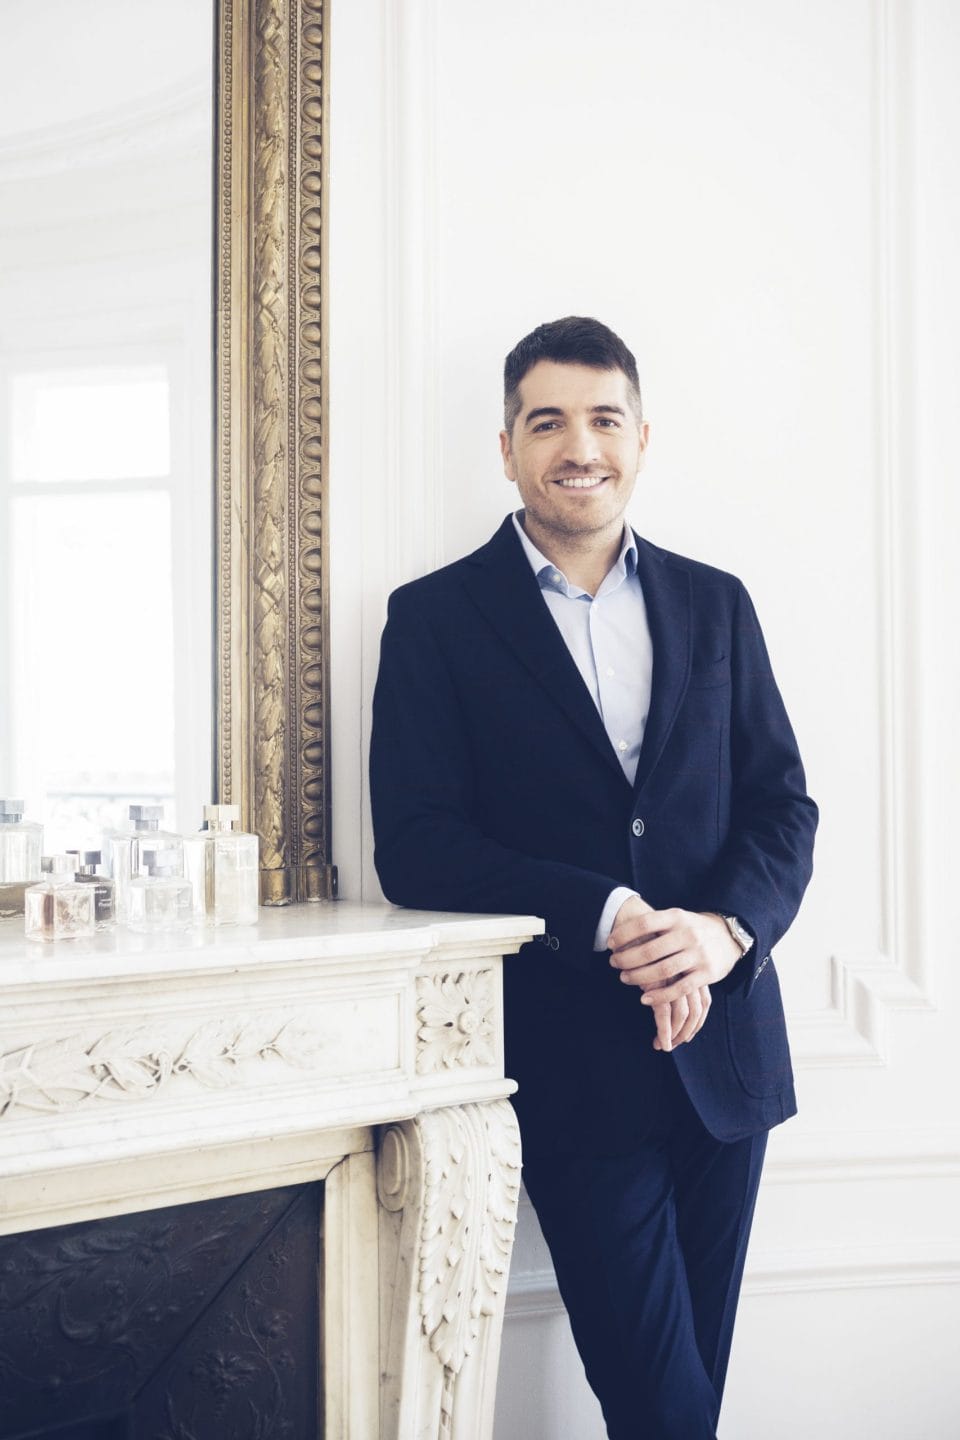 Marc Chaya: The mind behind perfume powerhouse Maison Francis